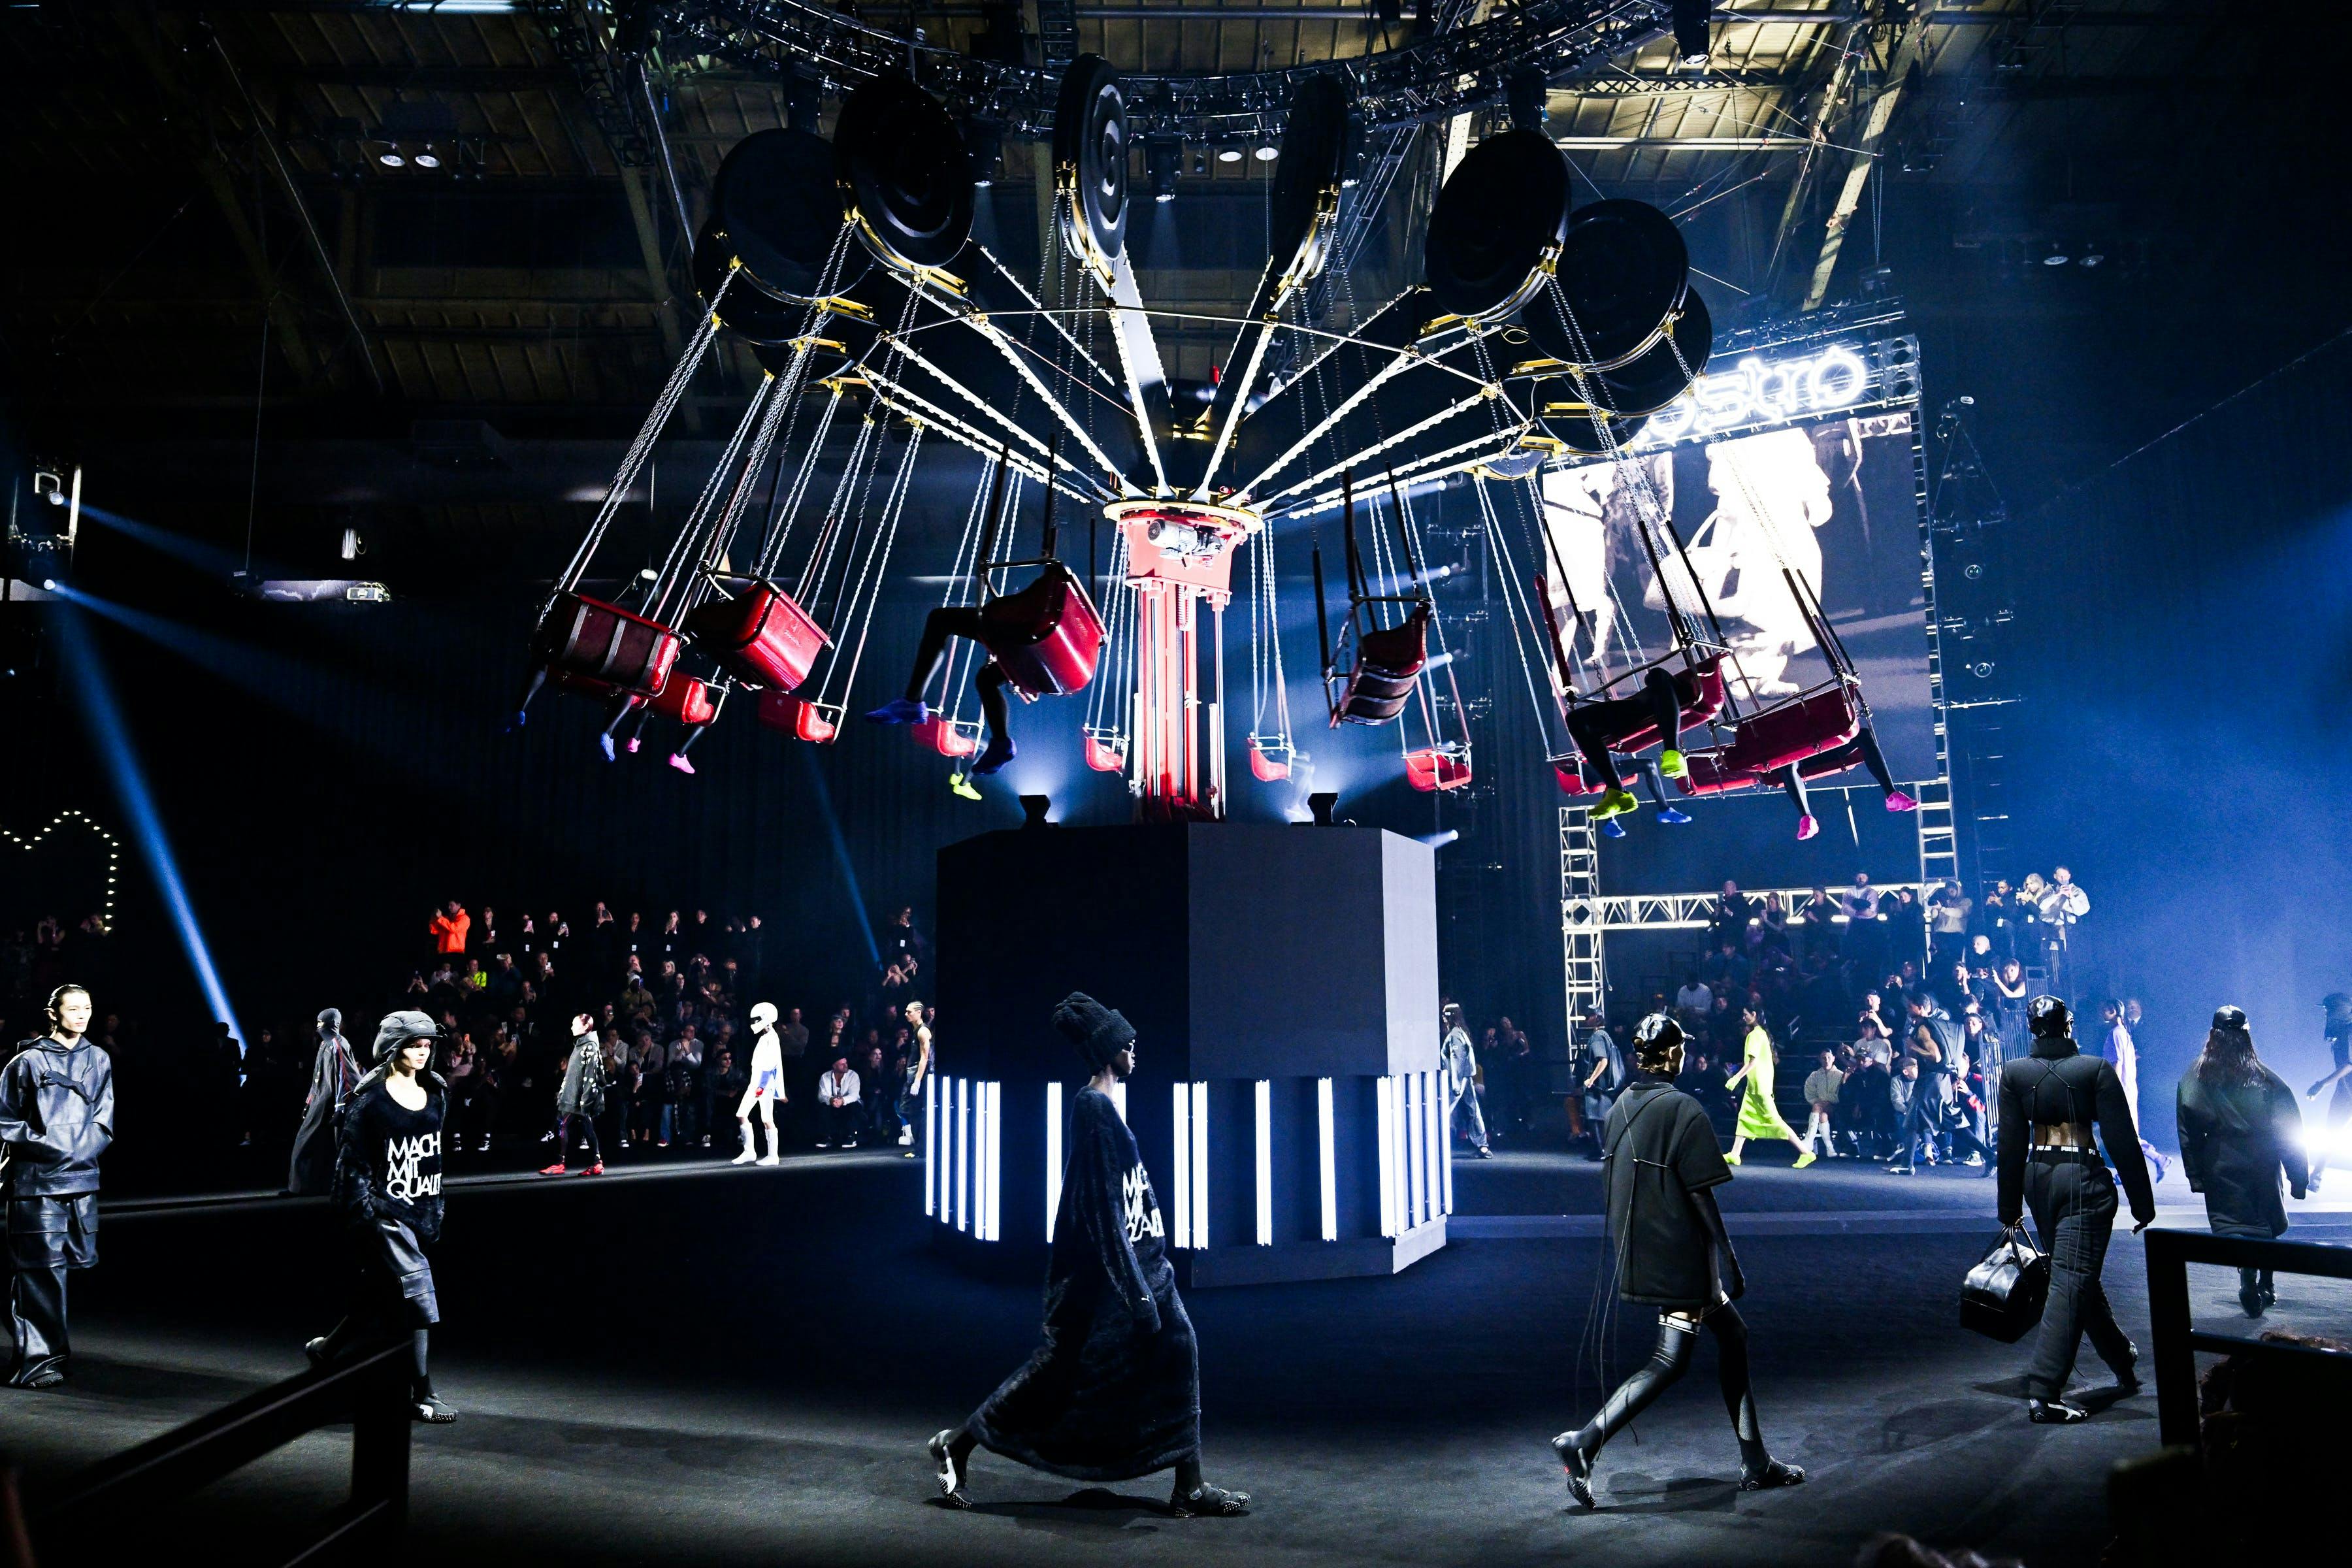 horizontal, **puma** manhattan lighting stage concert crowd person handbag shoe people group performance urban